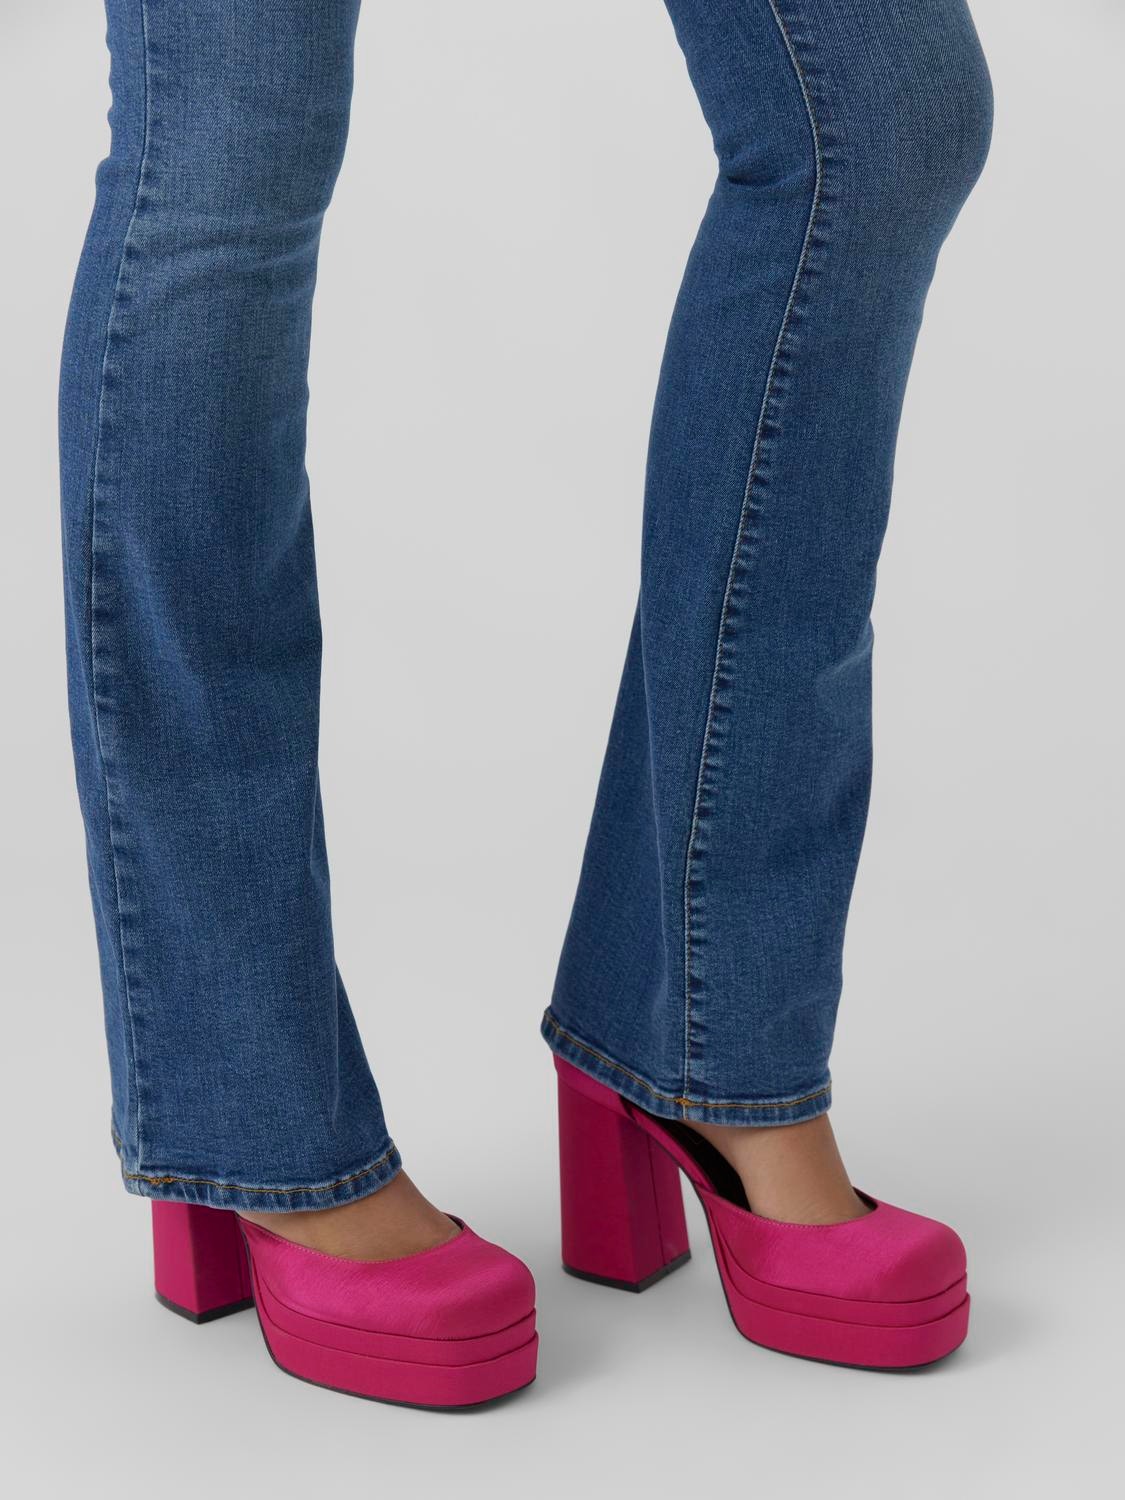 Vero Moda VMSIGA Krój flared Jeans -Medium Blue Denim - 10279225